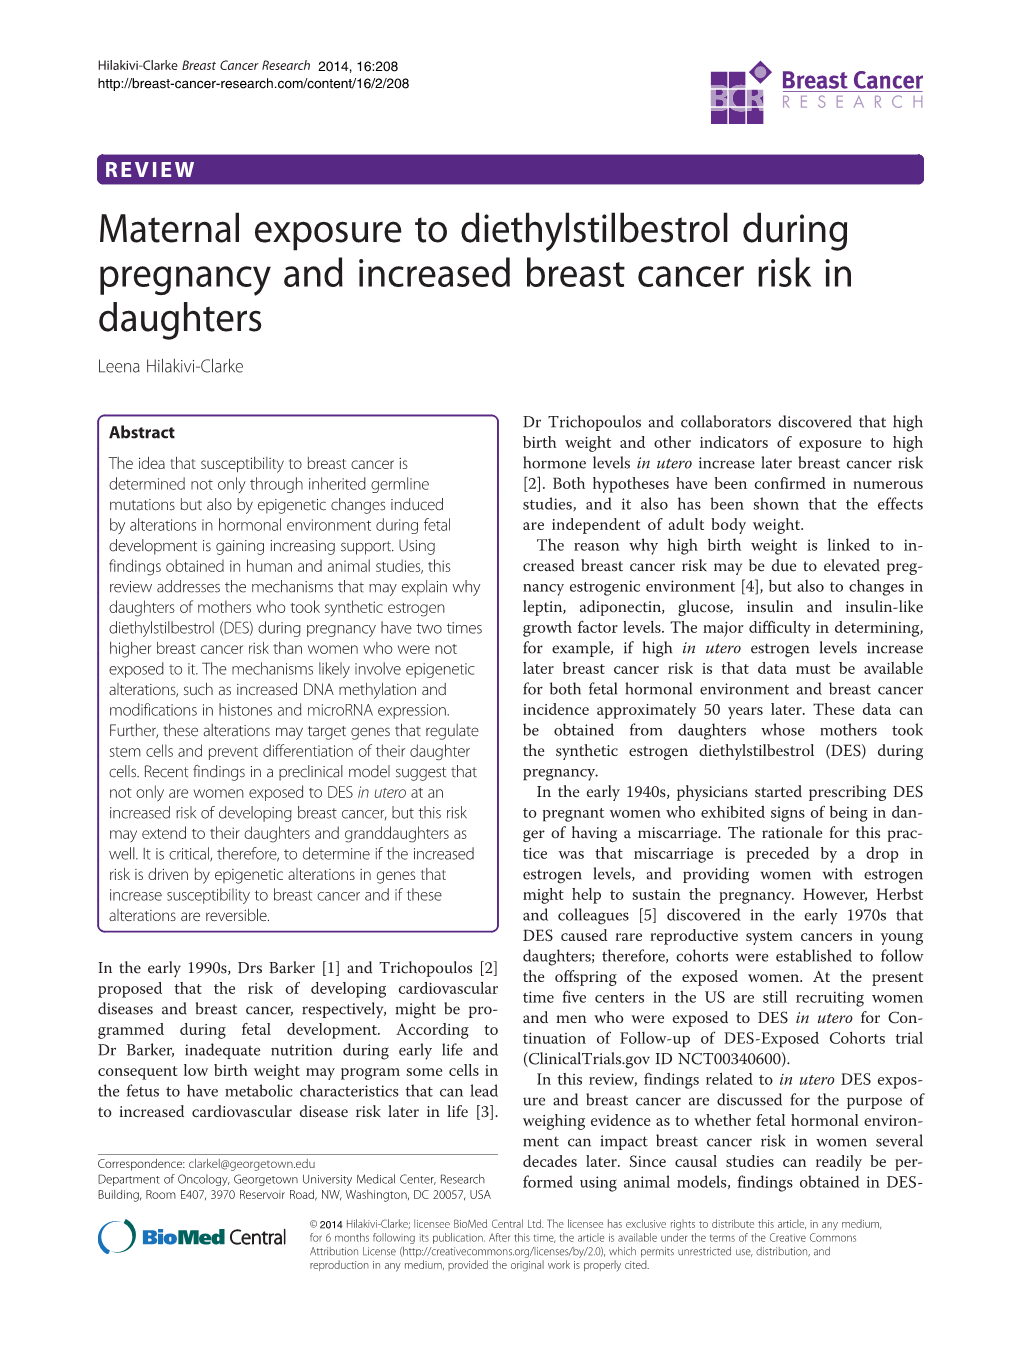 Maternal Exposure to Diethylstilbestrol During Pregnancy and Increased Breast Cancer Risk in Daughters Leena Hilakivi-Clarke